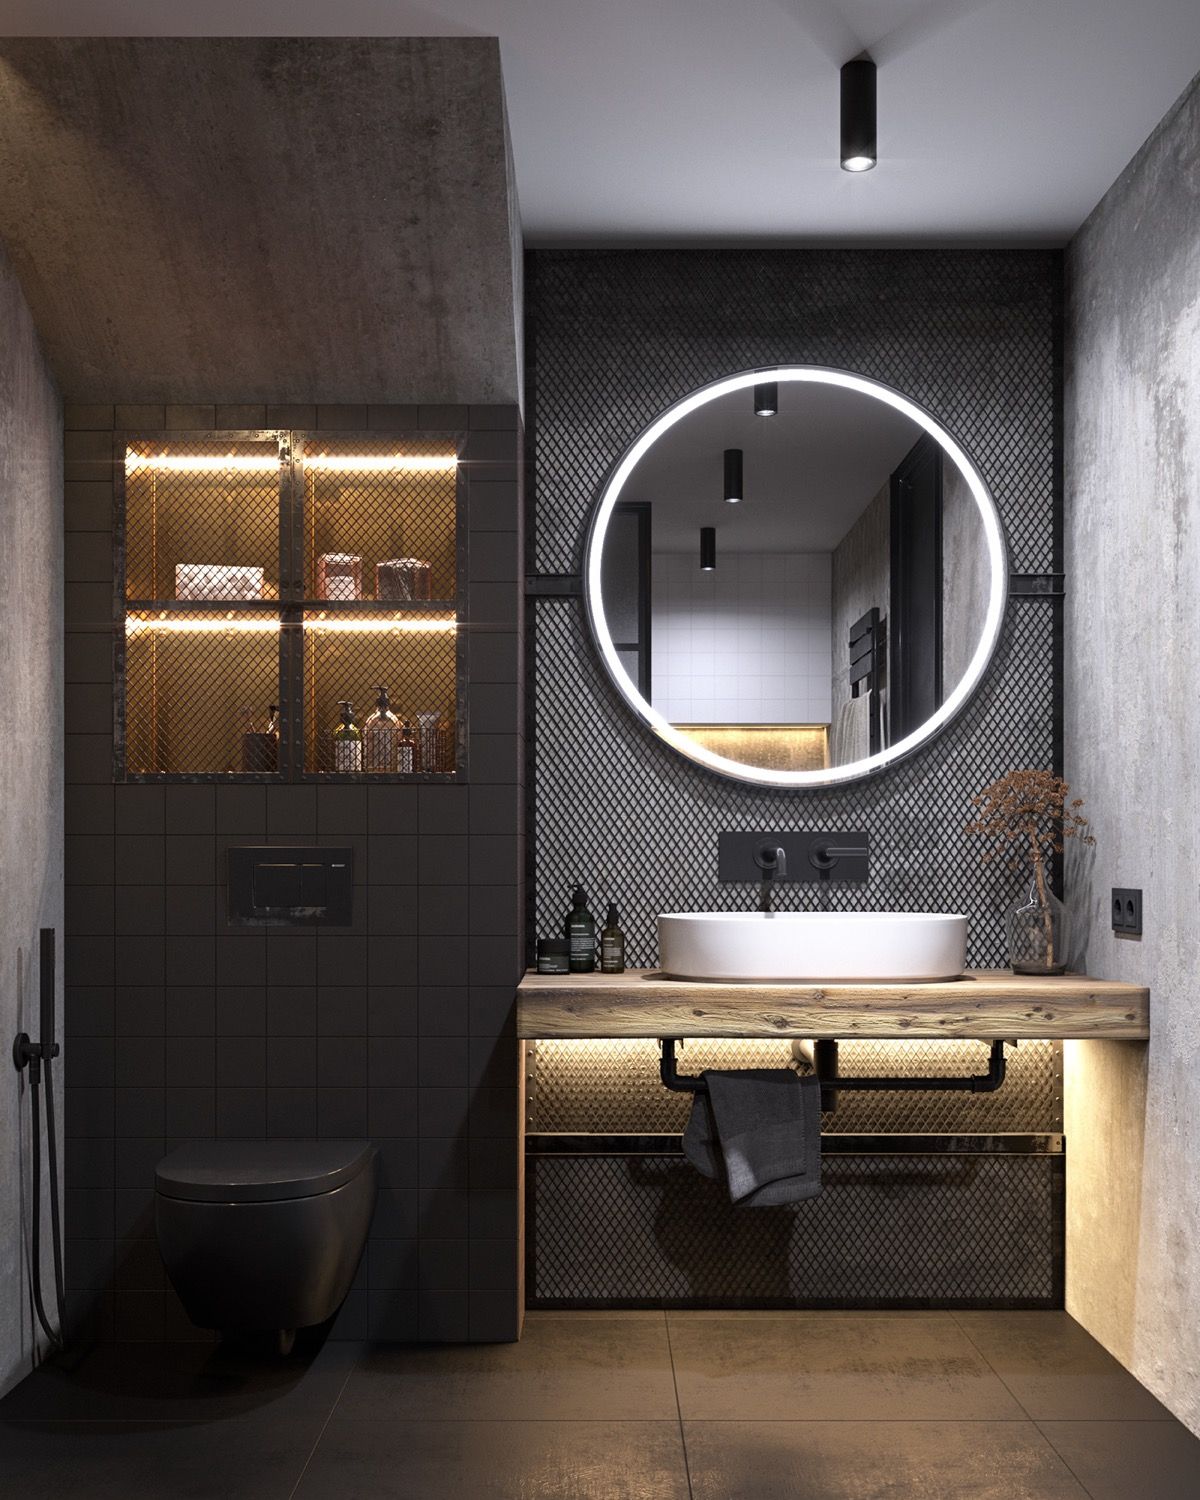 An Elegant Bathroom with Dramatic Light